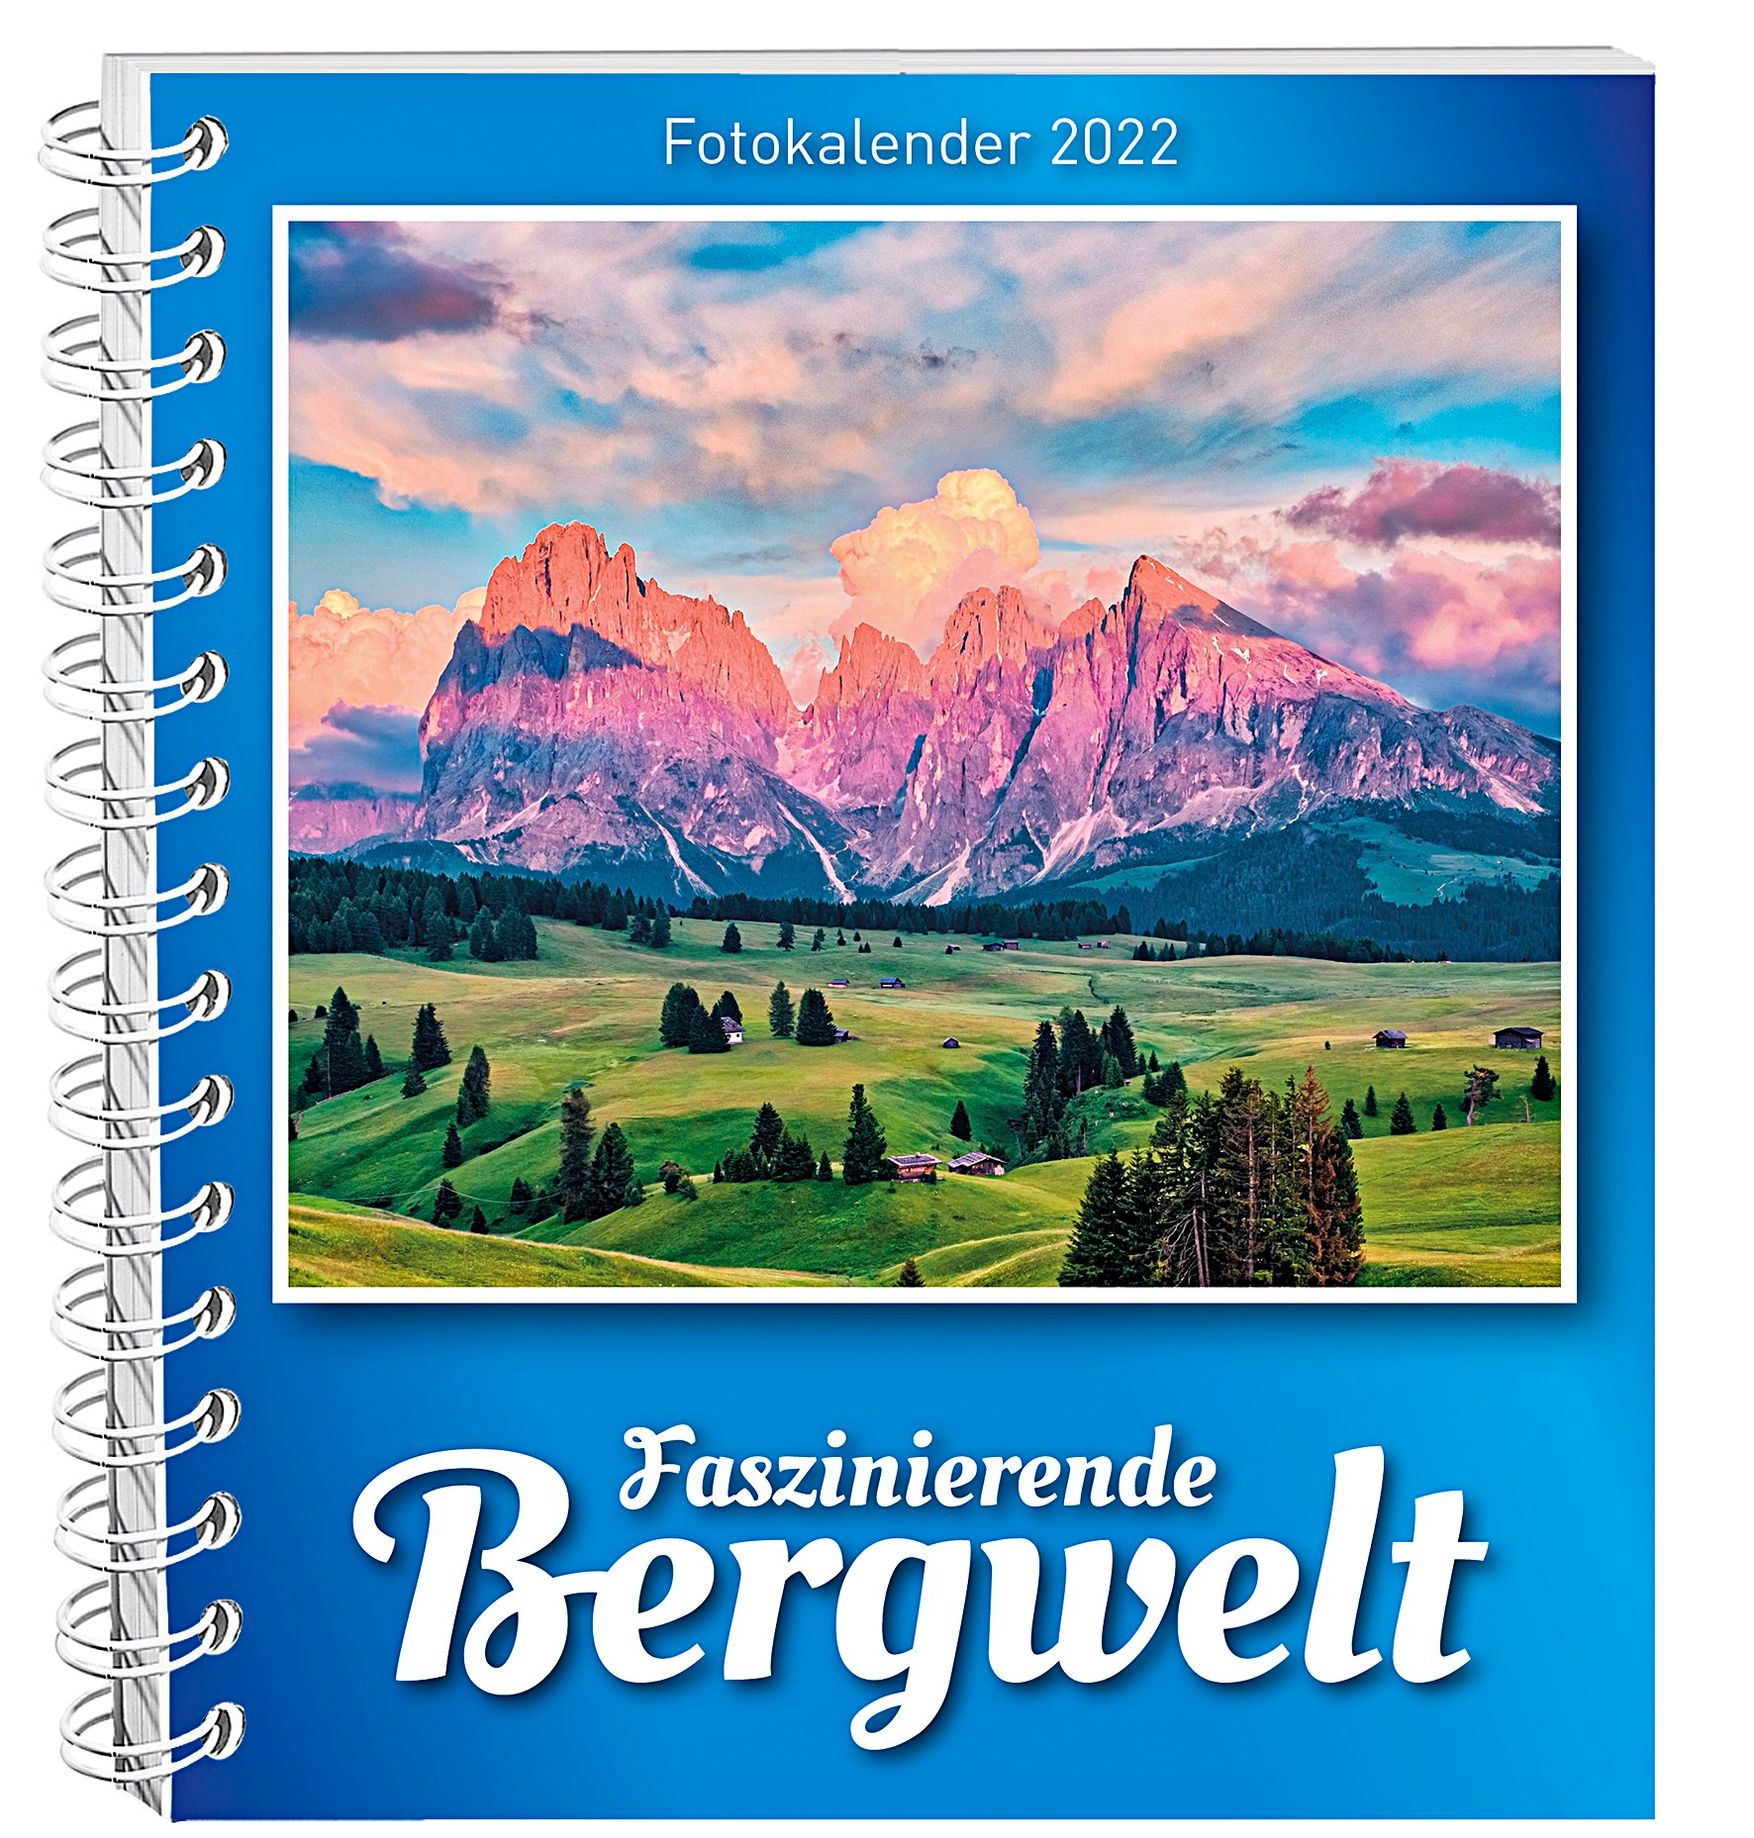 Faszinierende Bergwelt Fotokalender 2022 - Kalender bestellen